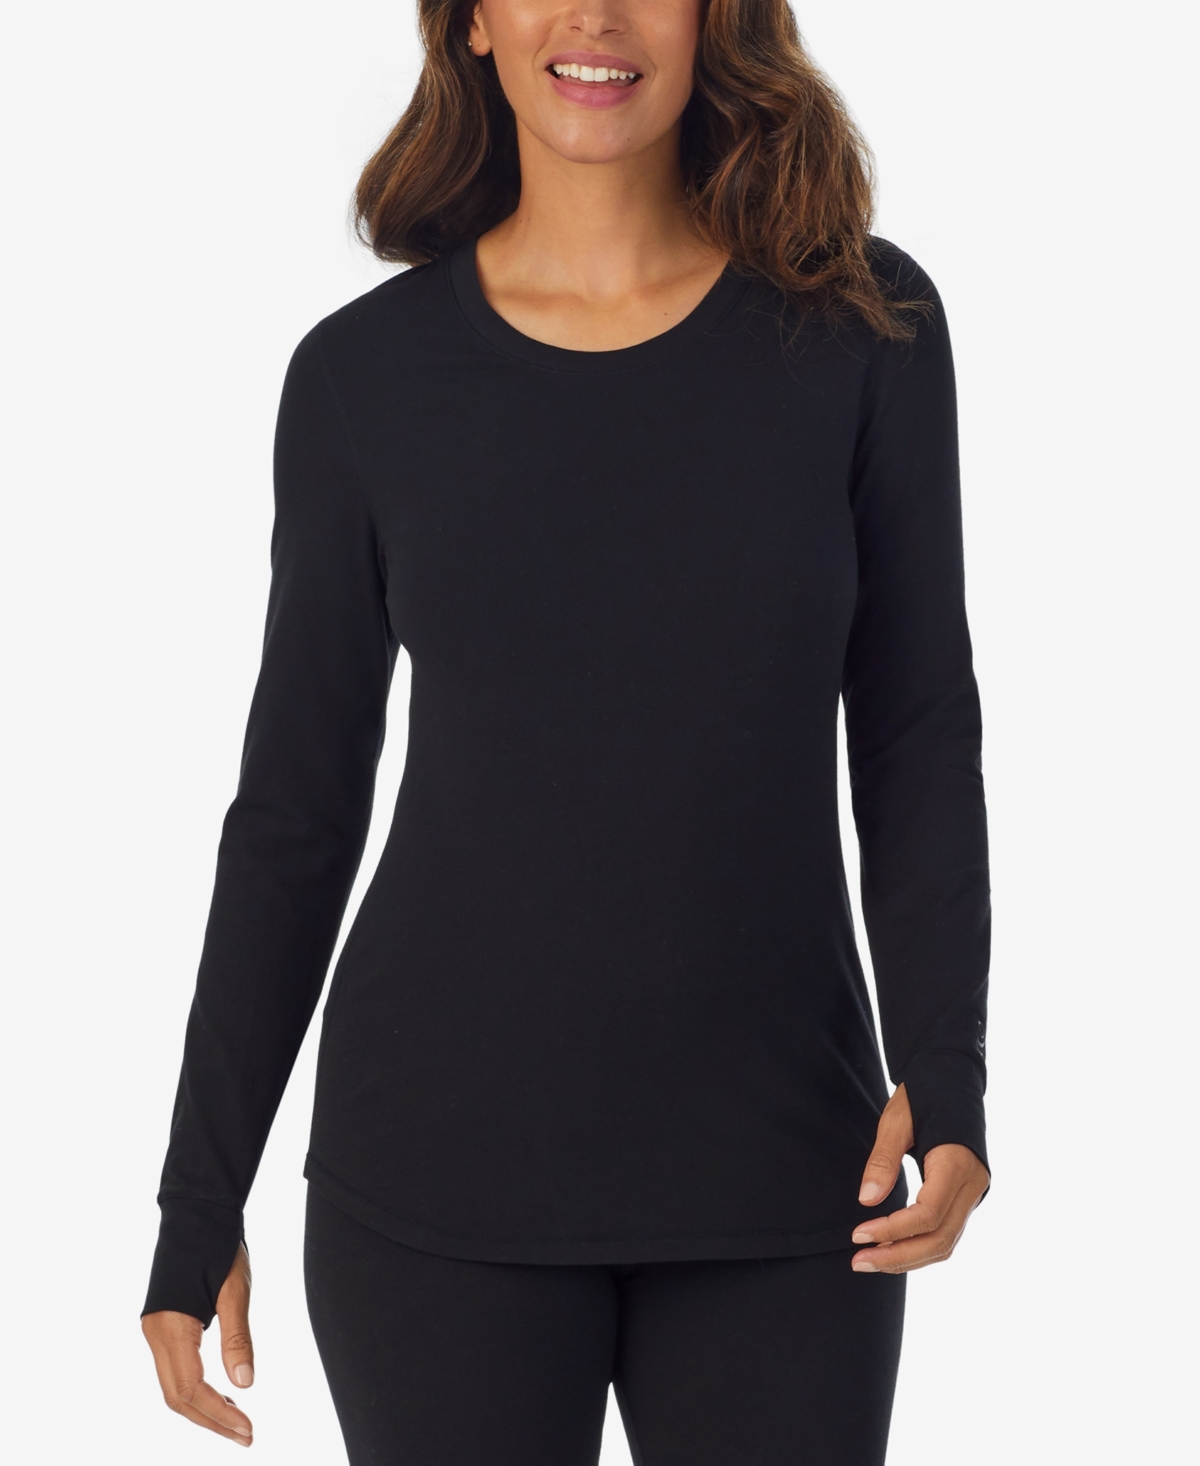 Women's Cottonwear Scoop-Neck Thumbhole Top - Black